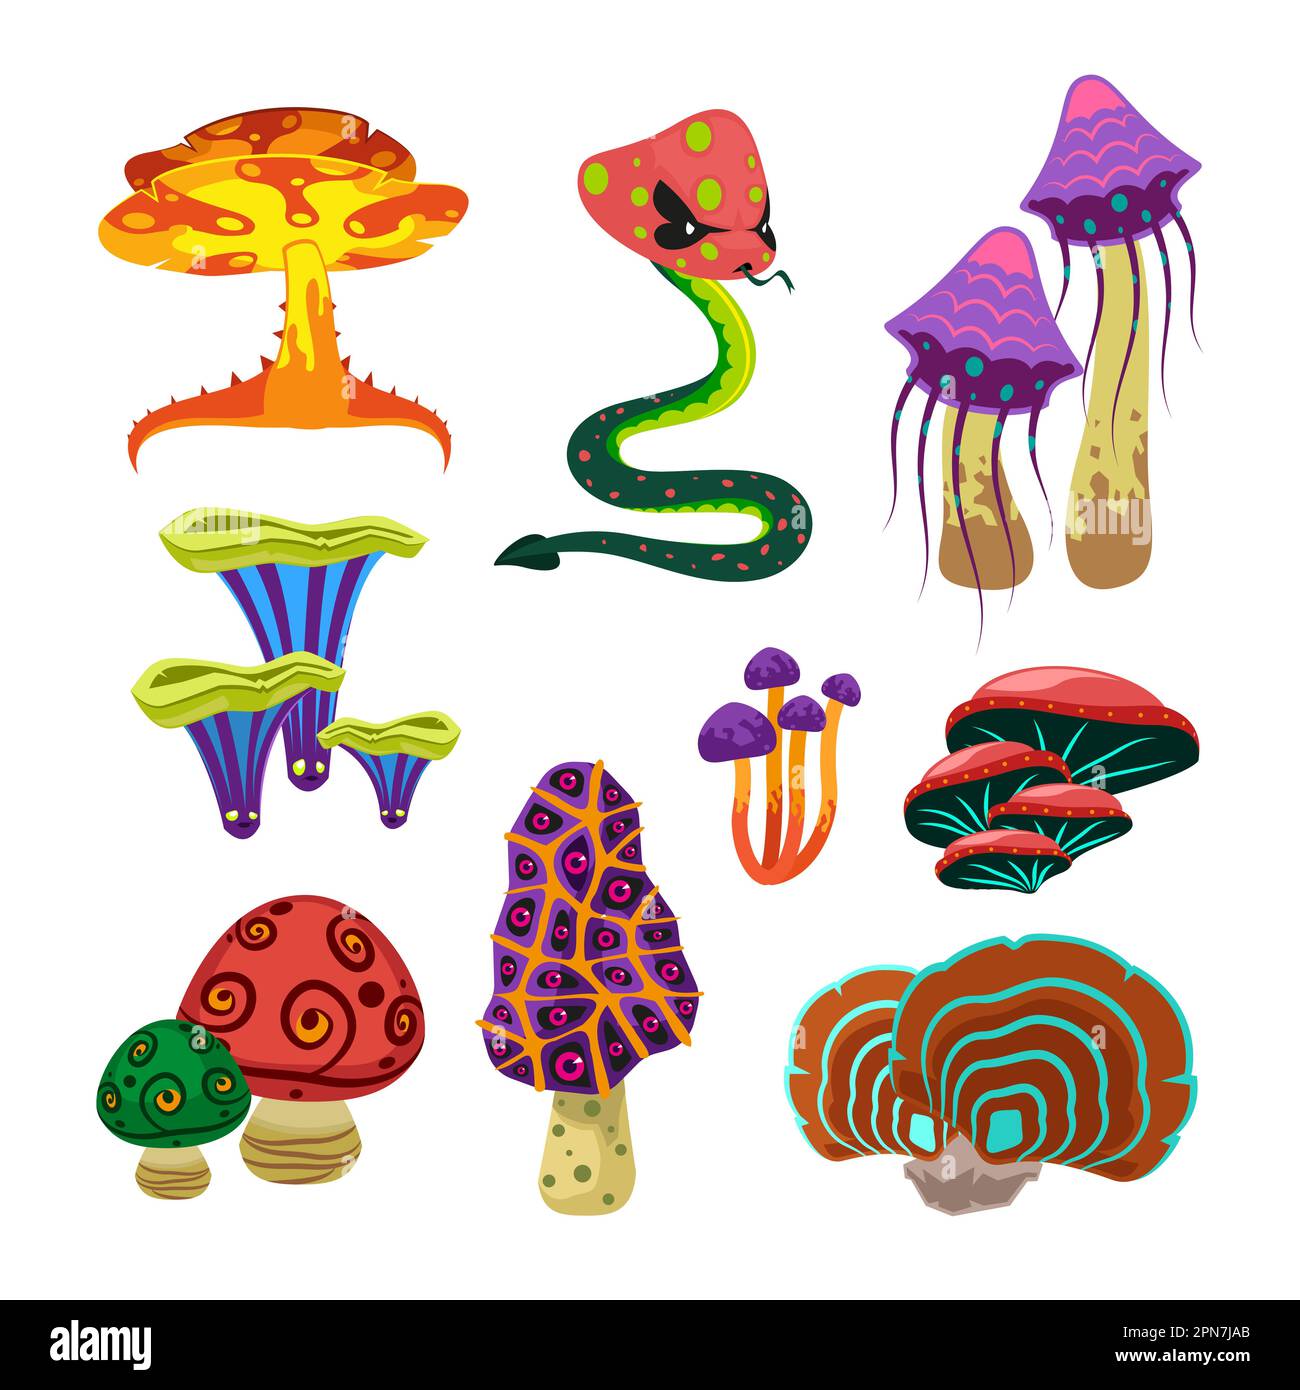 Groovy mushrooms 70s style vector illustrations set Stock Vector